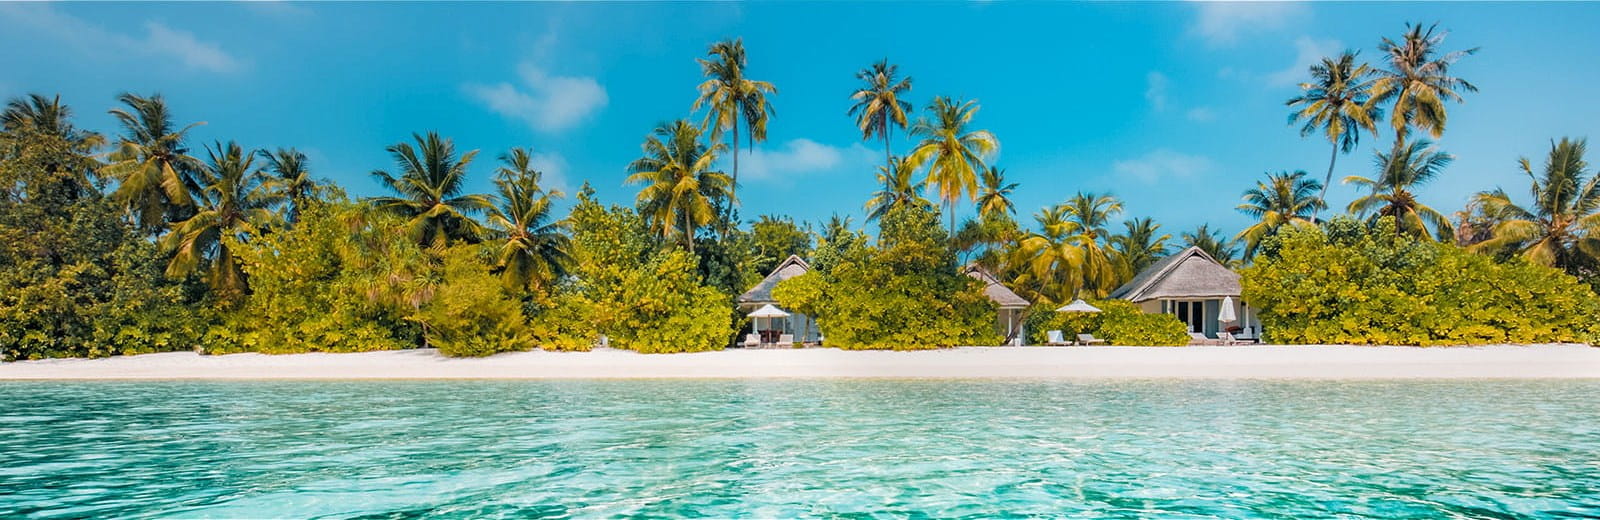 bahamas beach blue sky water sea ocean palm trees attracting talent ICAEW Taxline